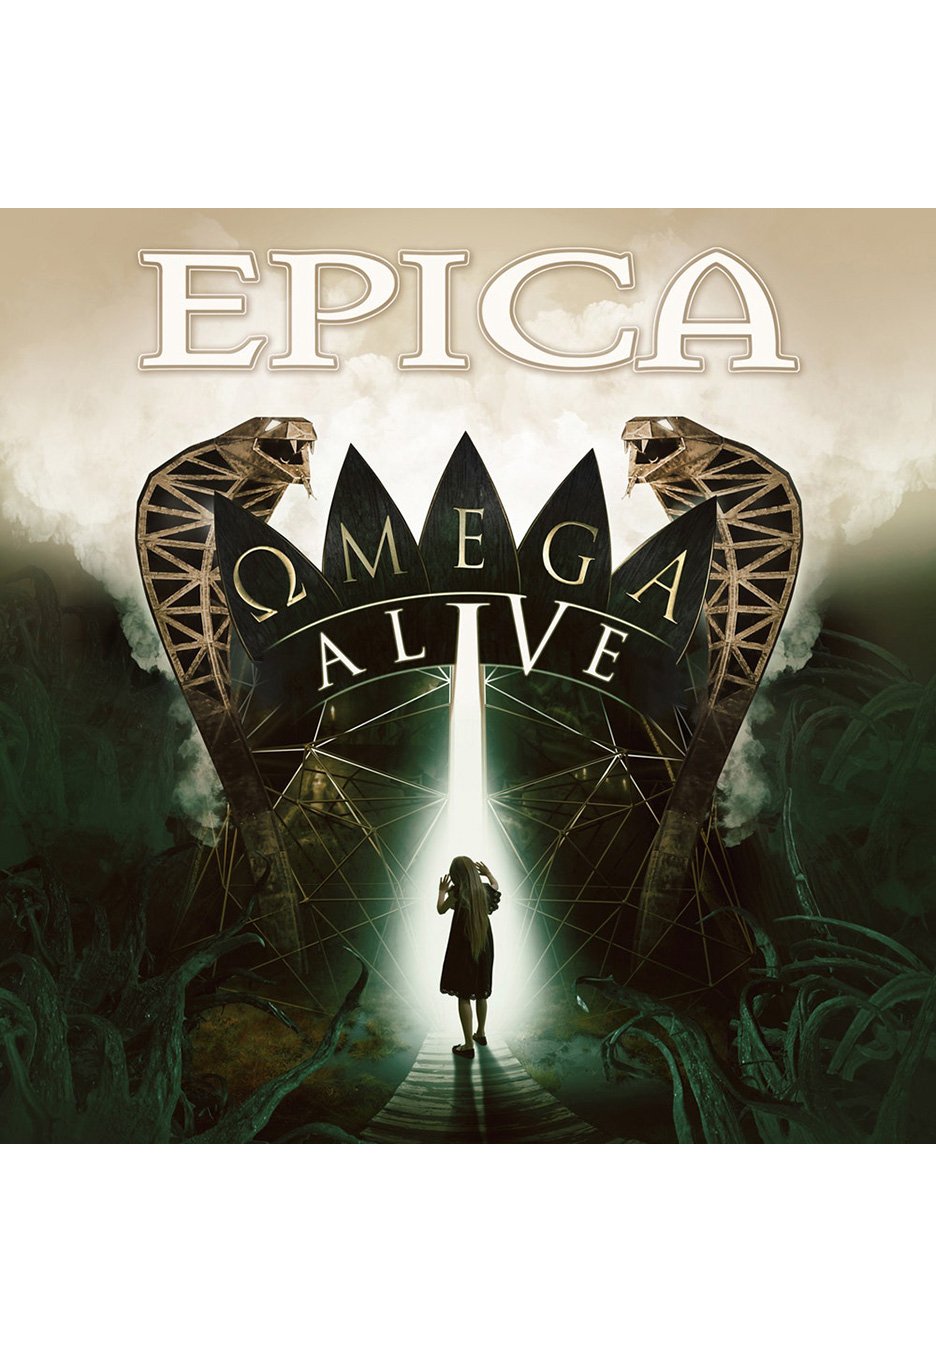 Epica - Omega Alive - 3 Vinyl